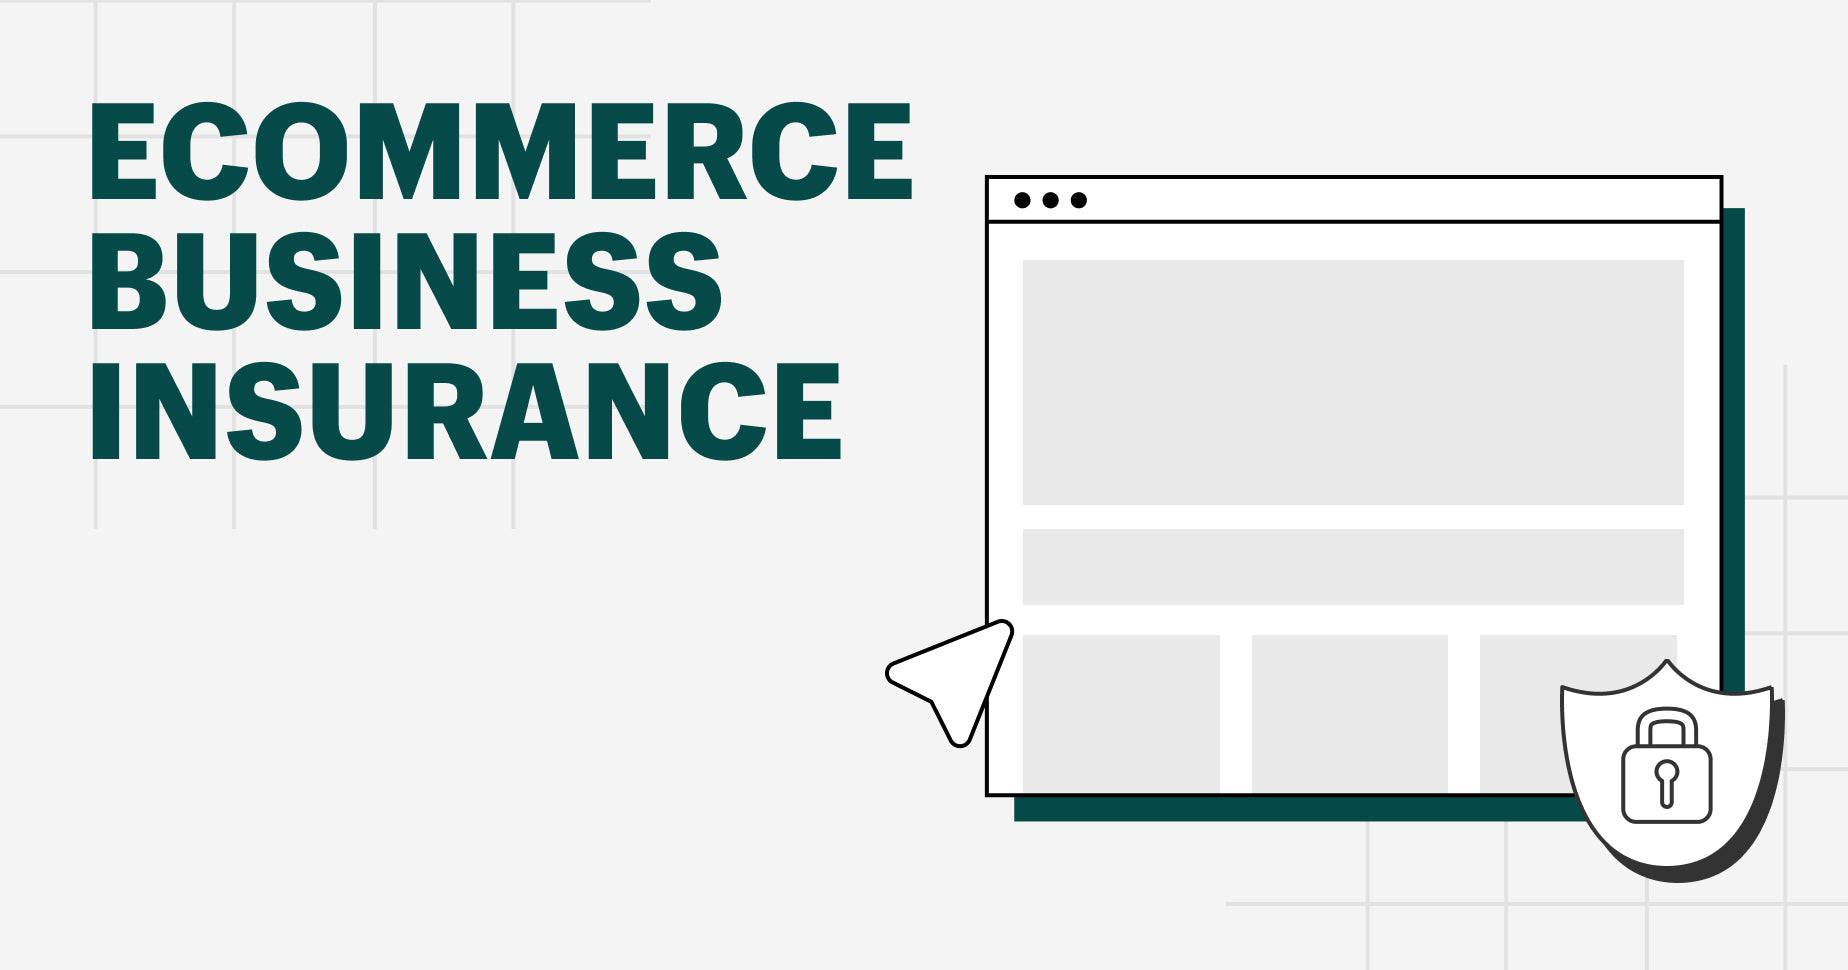 ecommerce business insurance